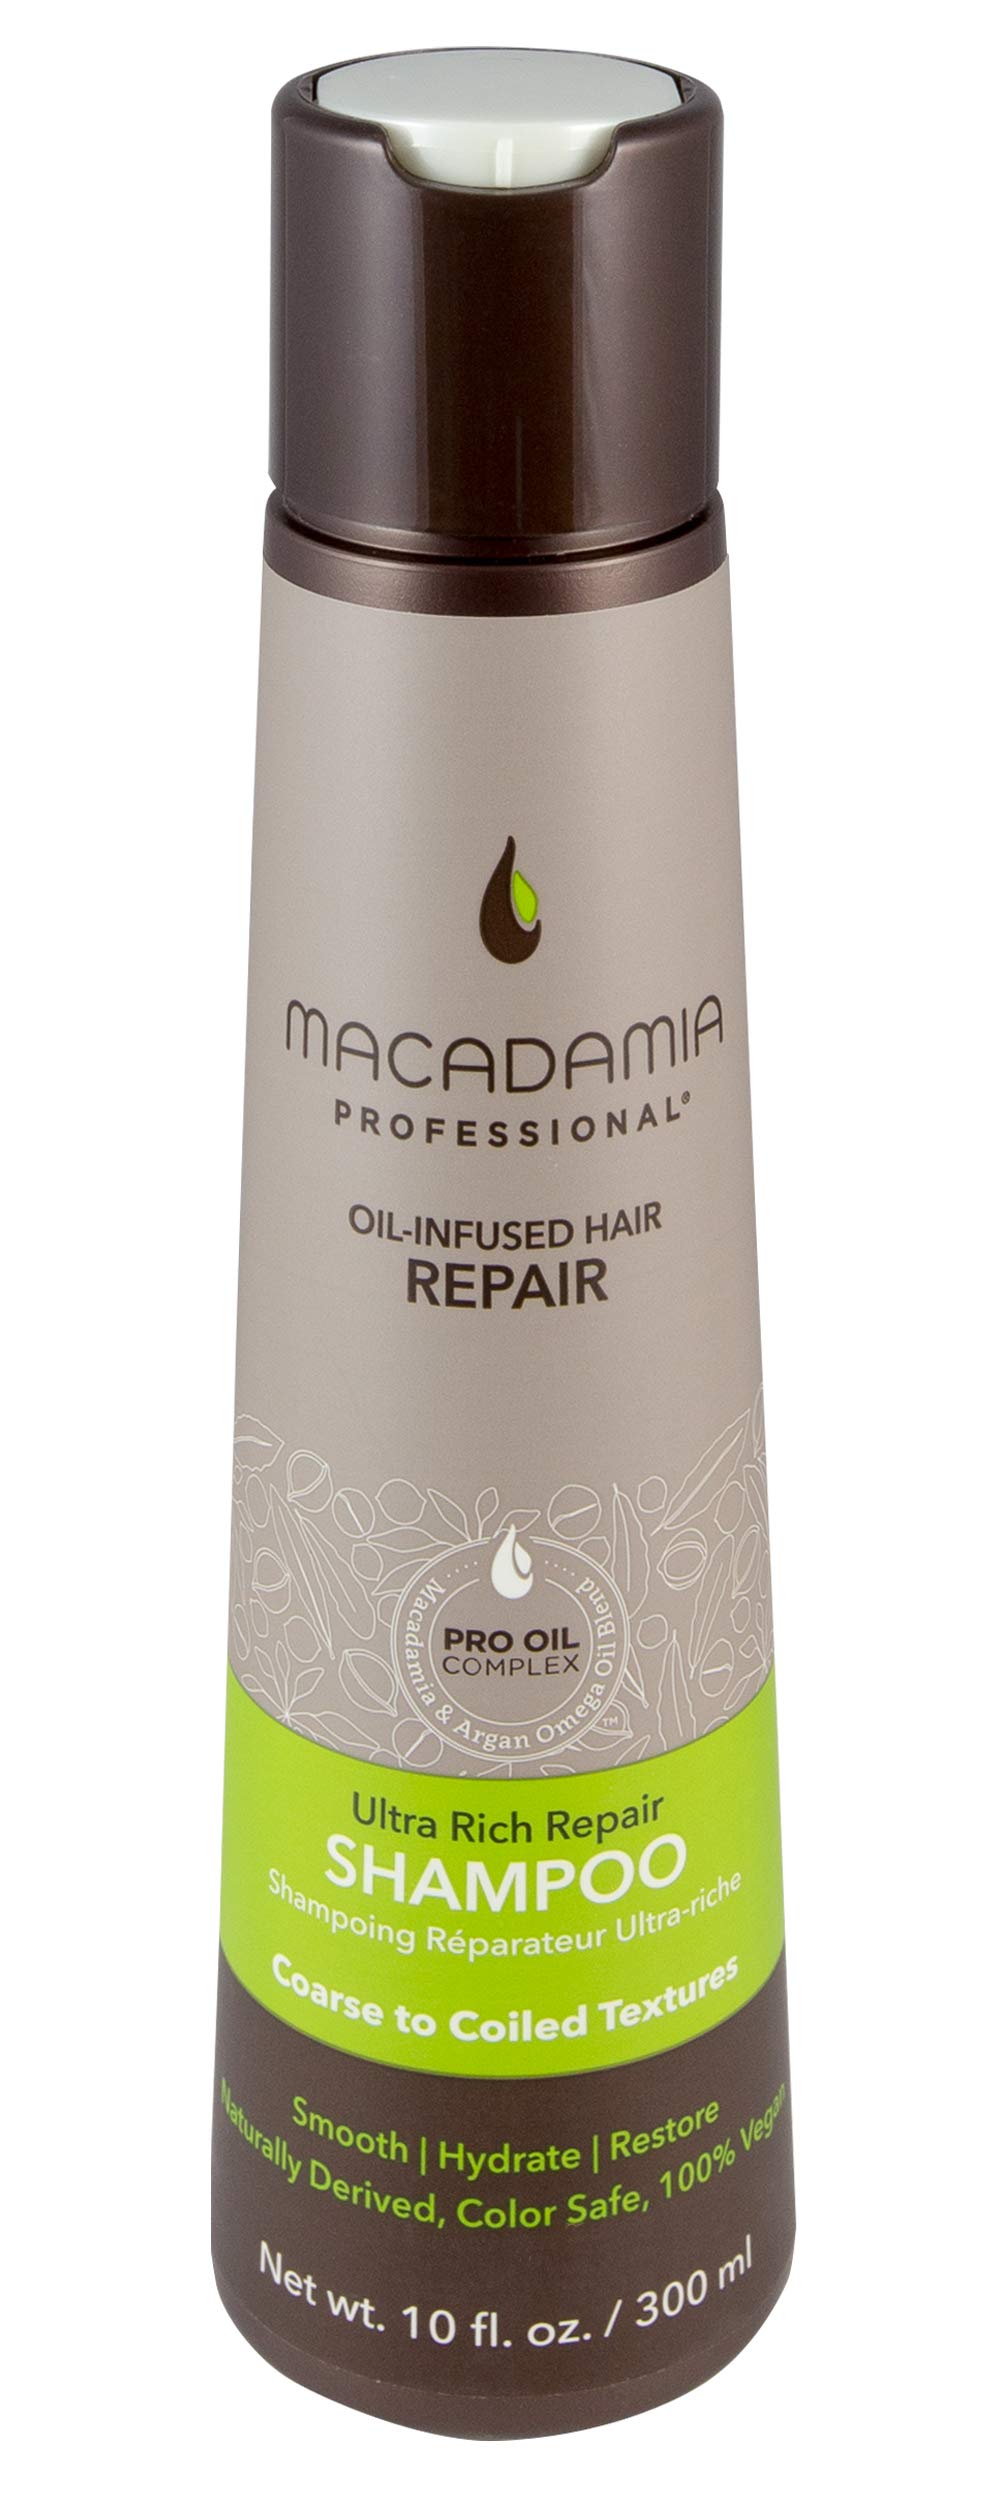 Macadamia Professional Hair Care Sulfate & Paraben Free Natural Organic Cruelty-Free Vegan Hair Products Ultra Rich Hair Repair Shampoo, 10oz (packaging may vary)